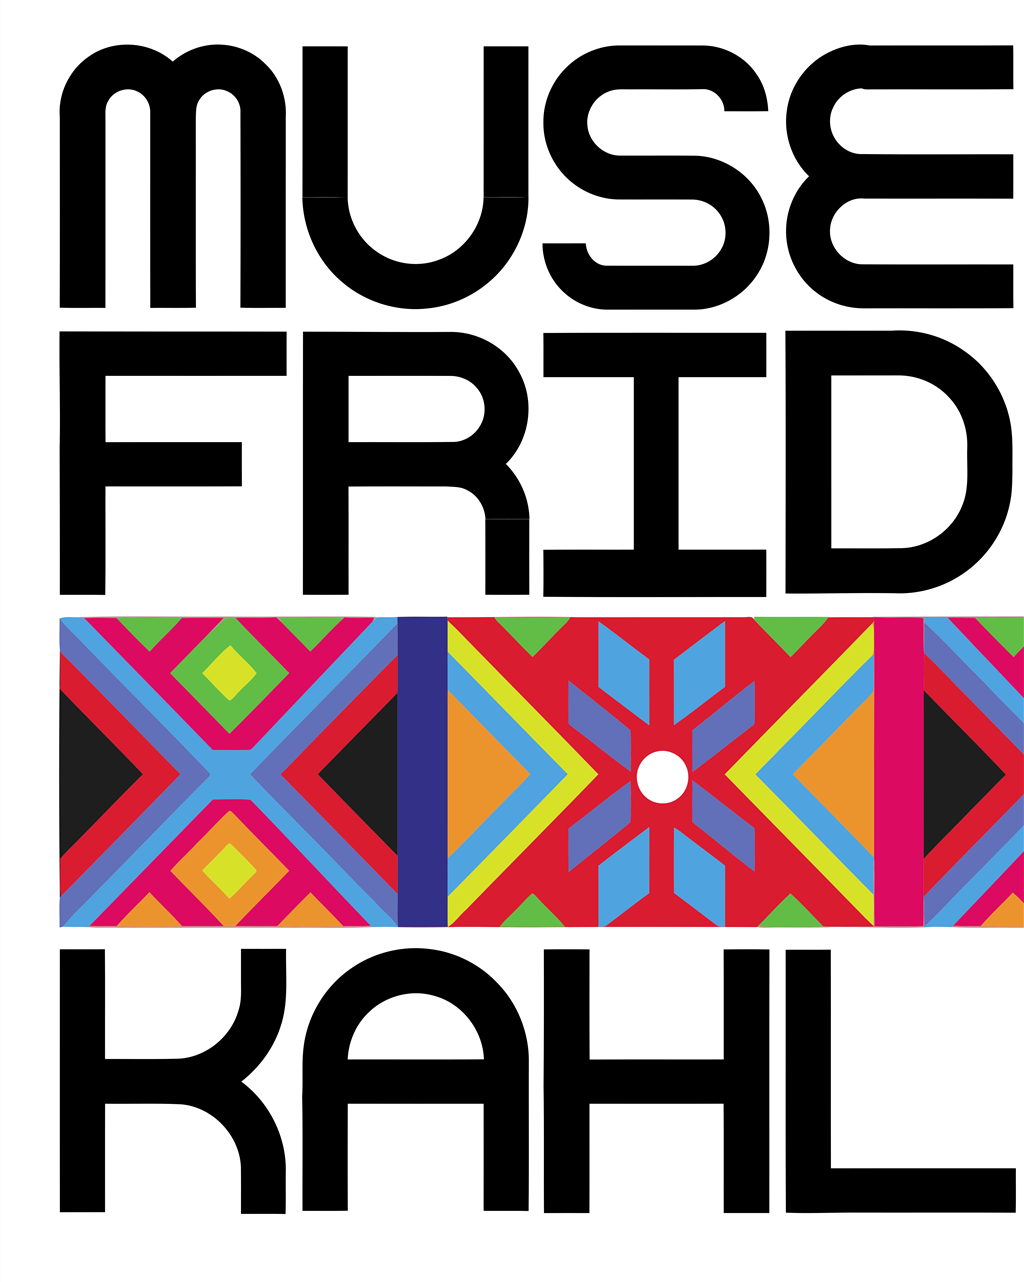 Museo Frida Kahlo logotype, transparent .png, medium, large